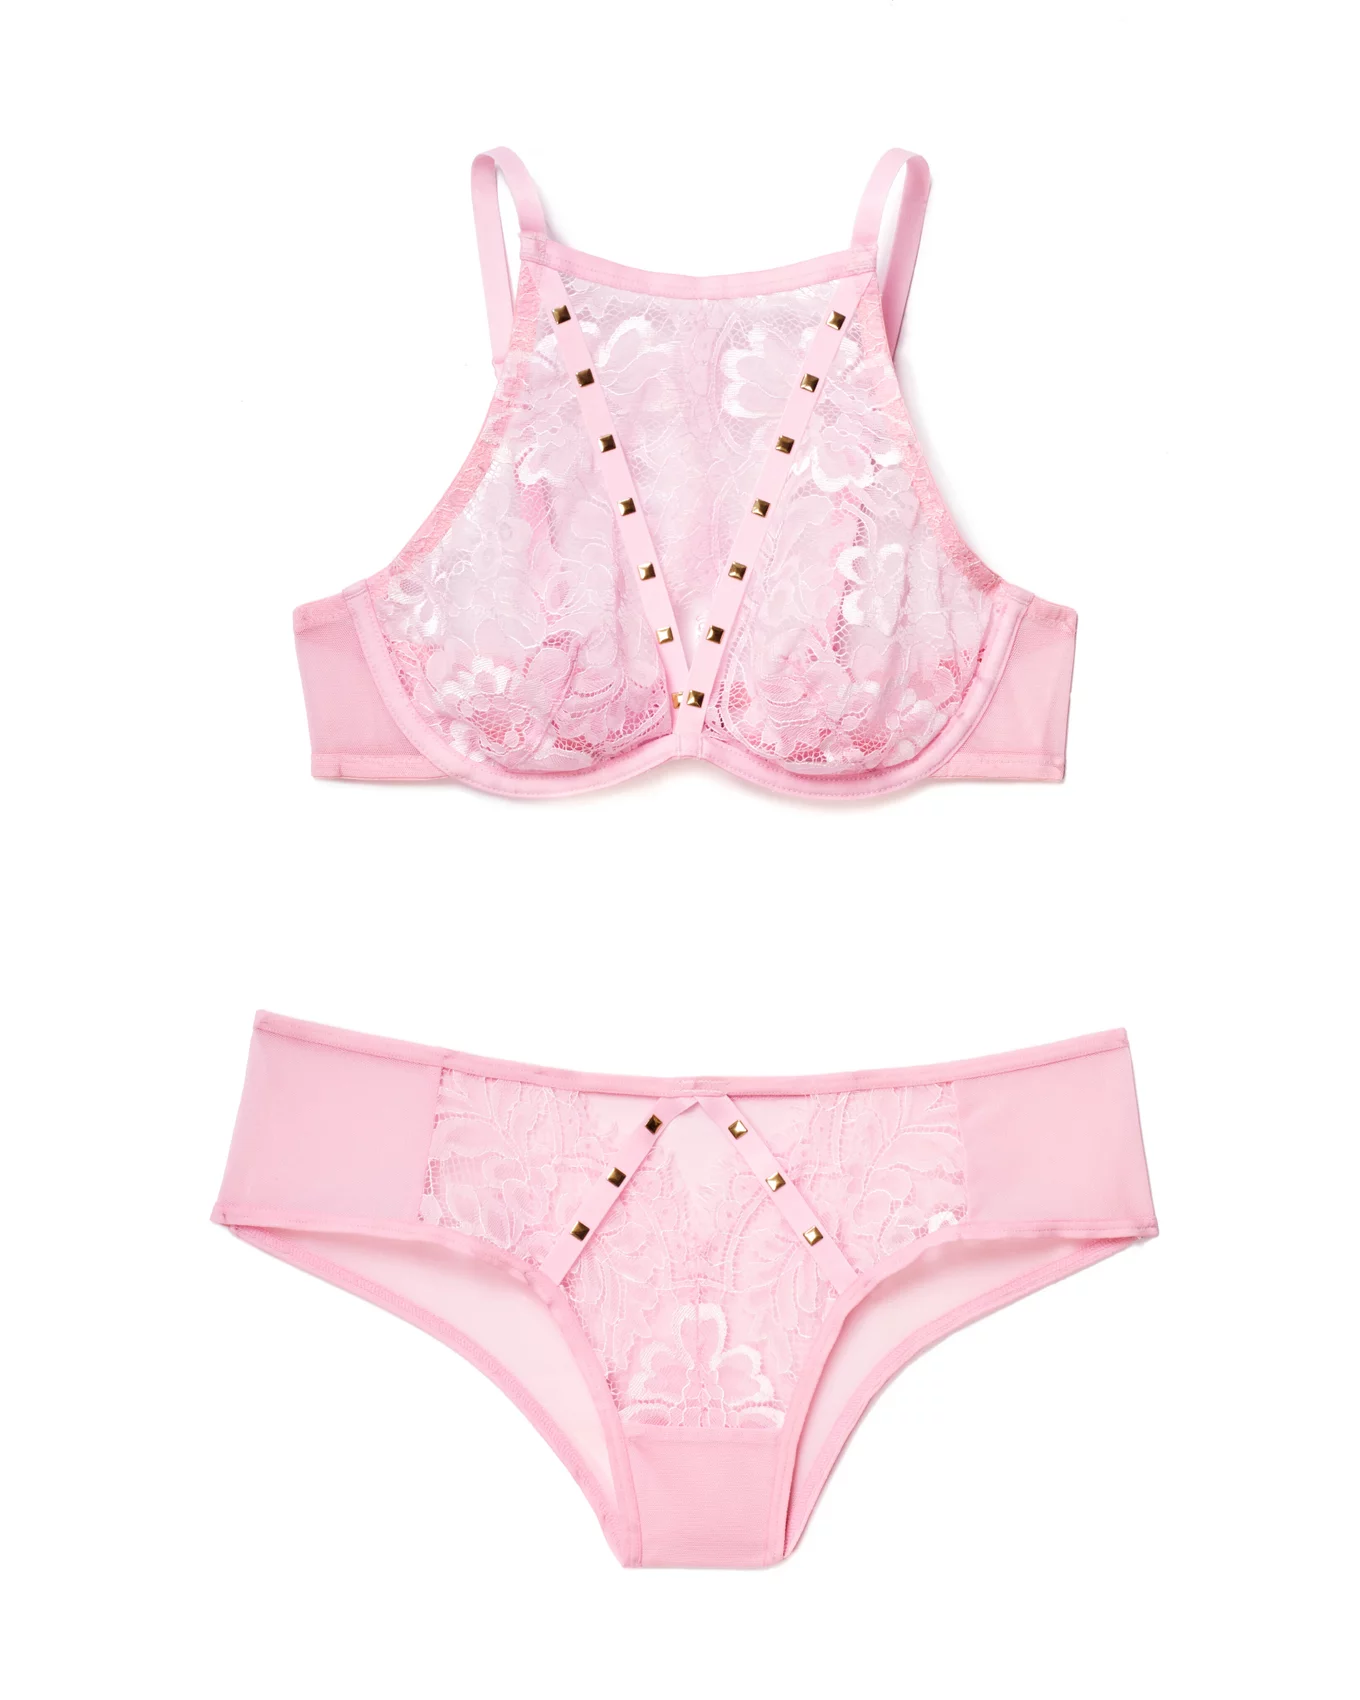 PINK Victoria's Secret, Intimates & Sleepwear, Super Cute Bra